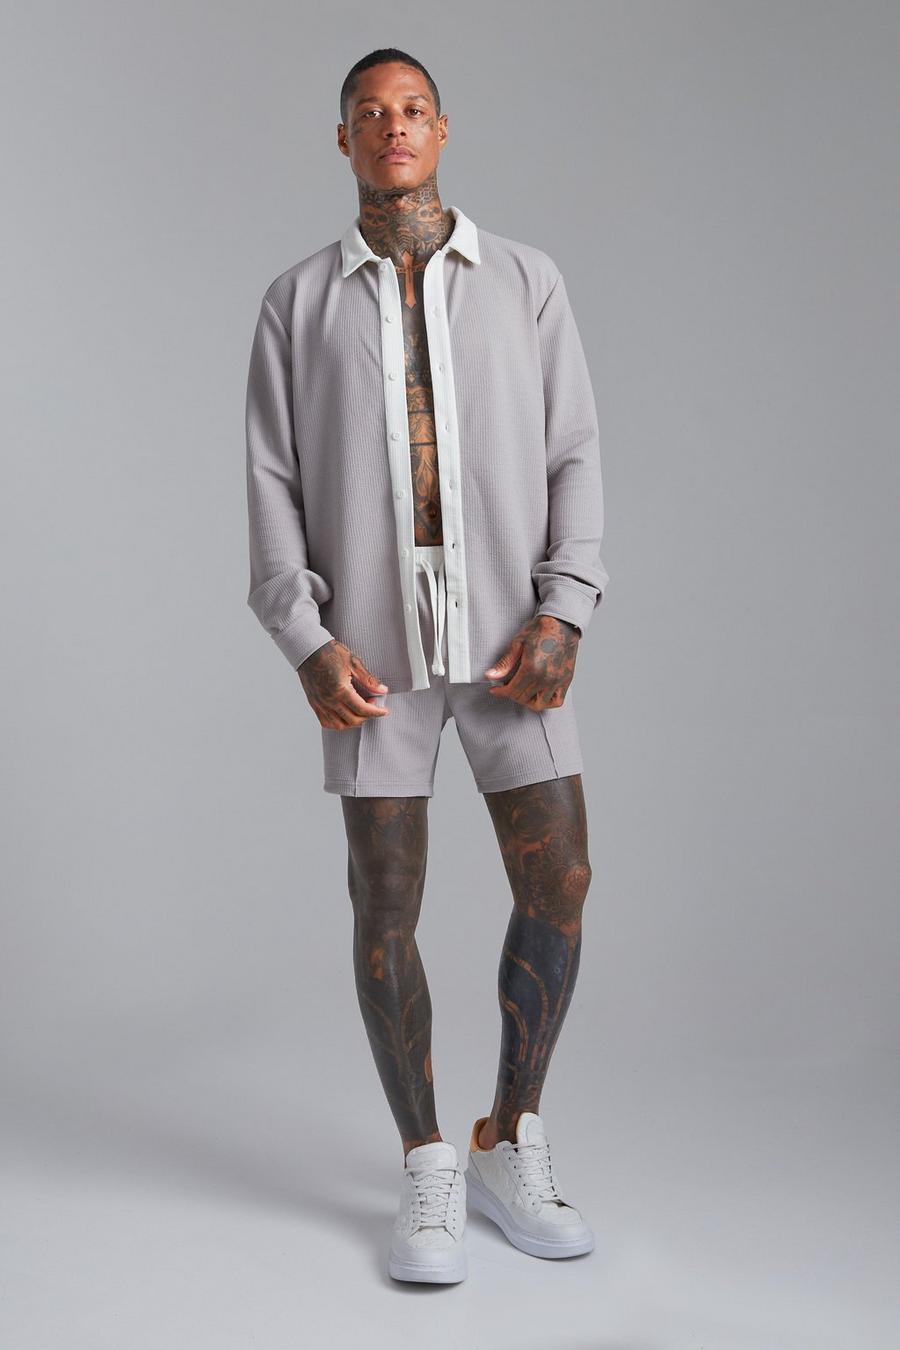 Grey Long Sleeve Jersey Textured Shirt And Short